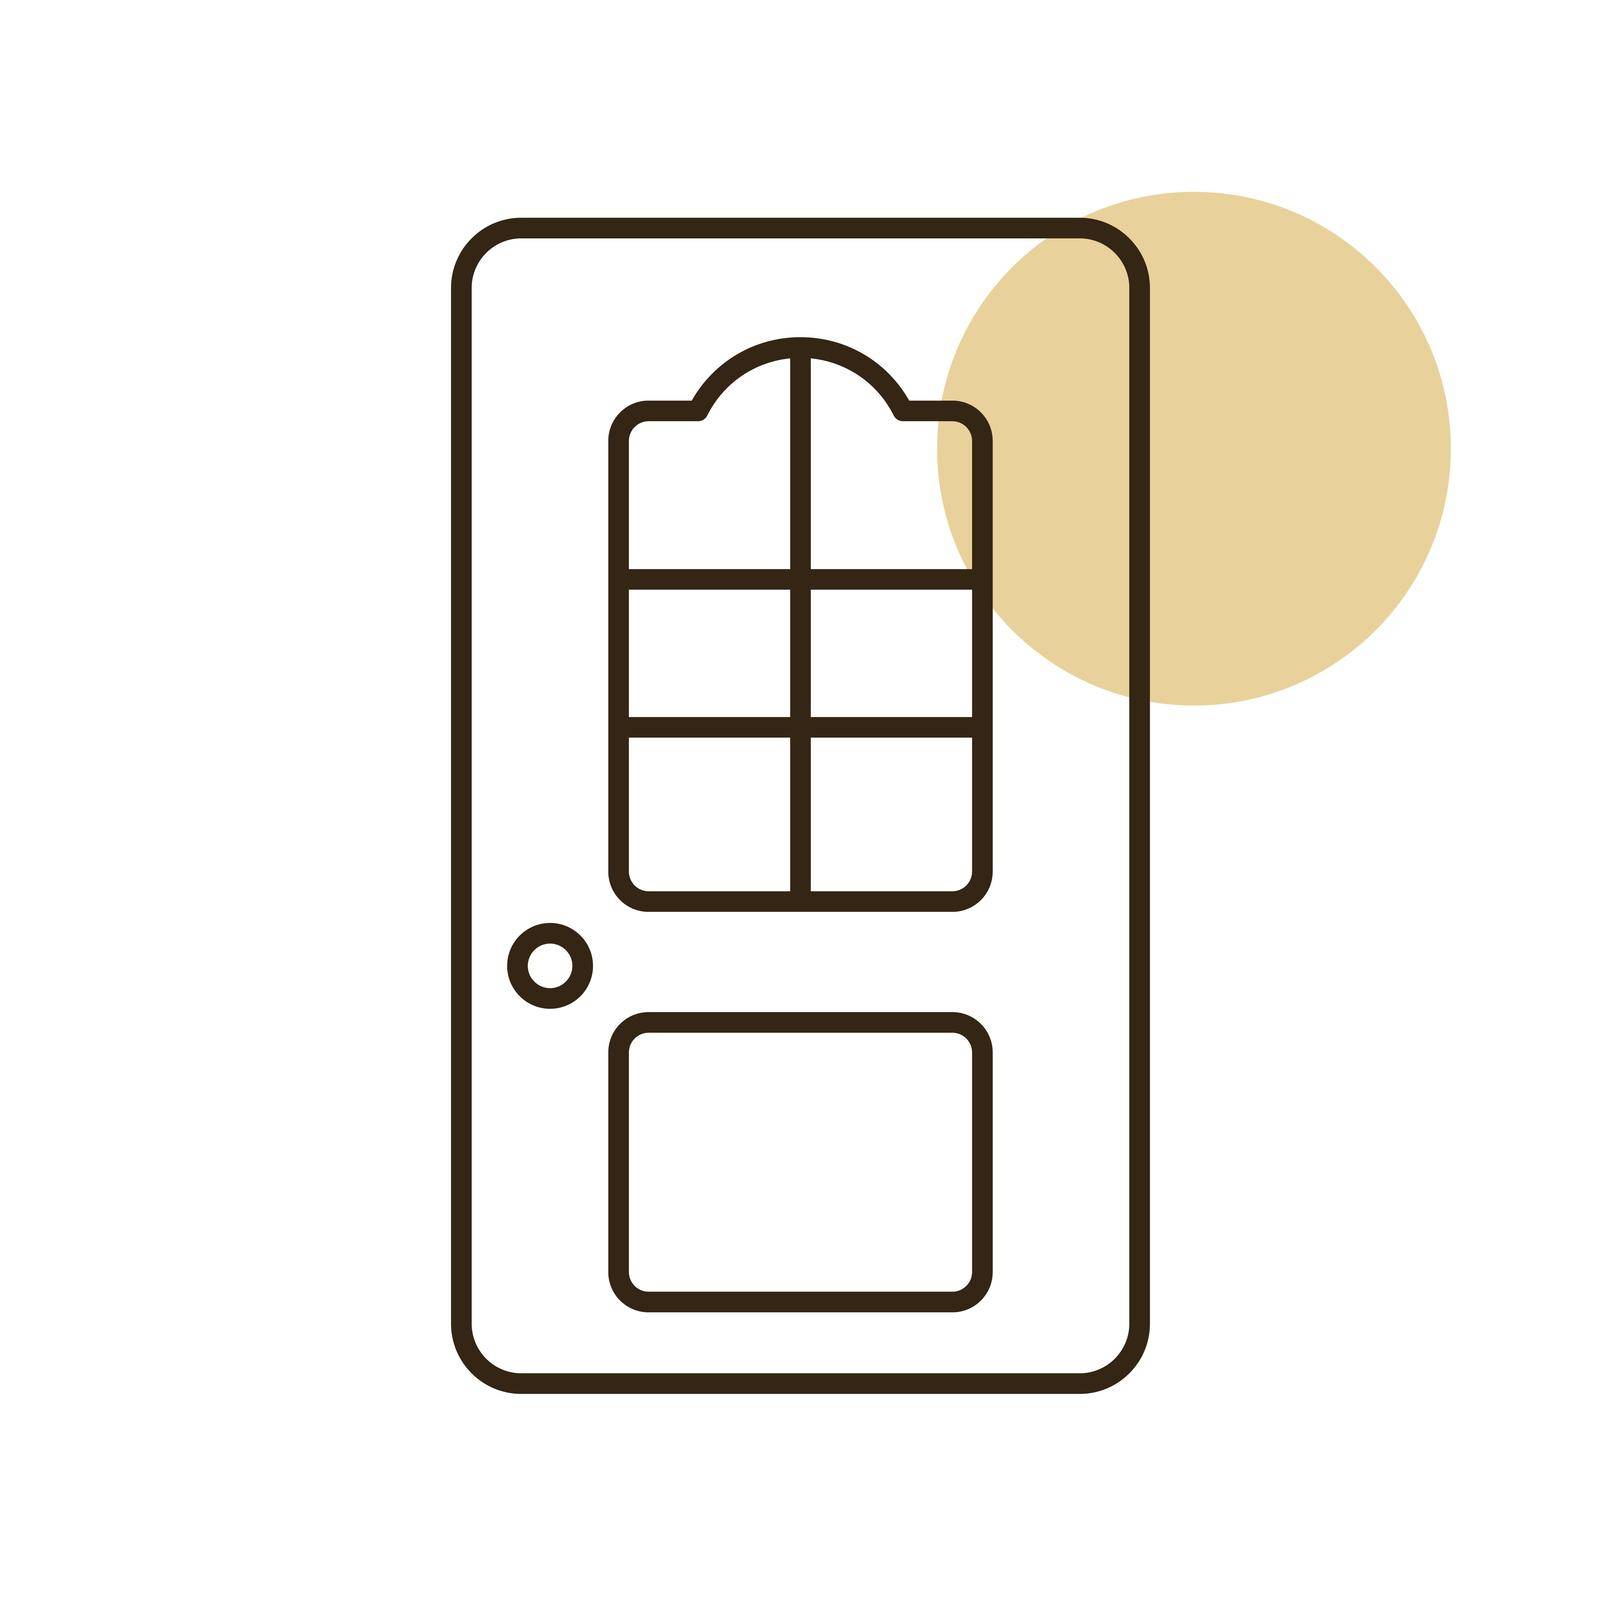 Interroom door vector flat icon. Construction, repair by nosik